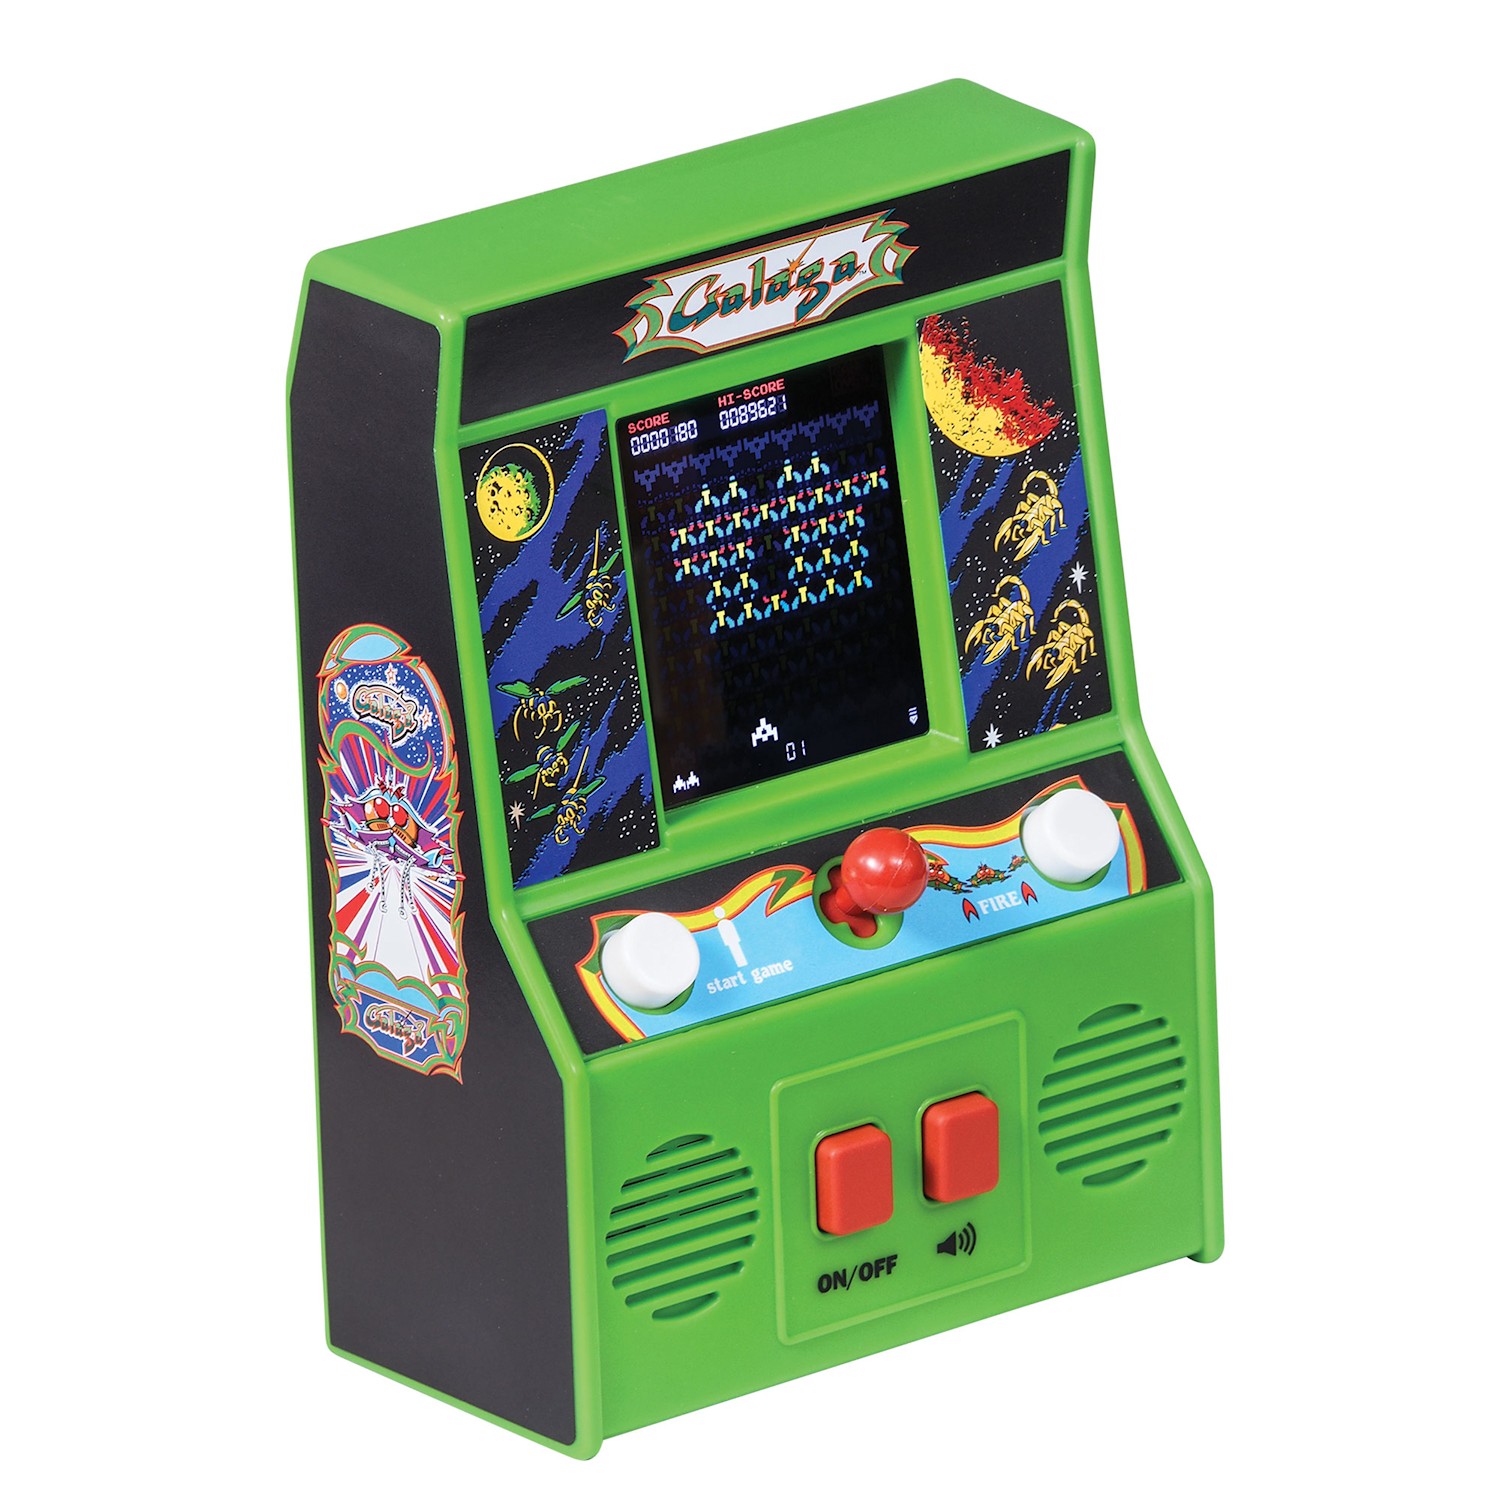 play galaga free on arcade